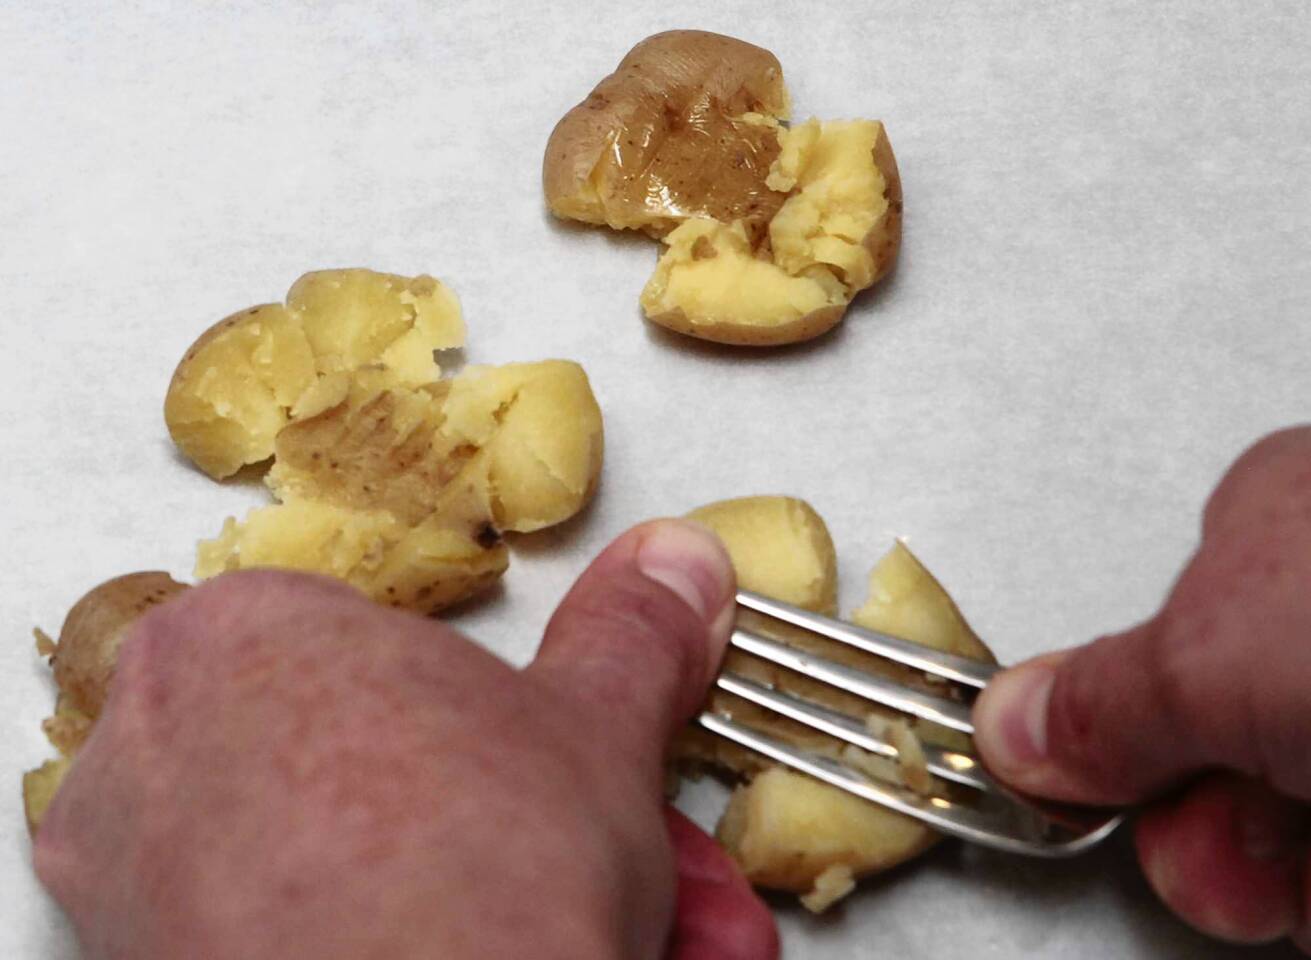 Smashed fried potatoes